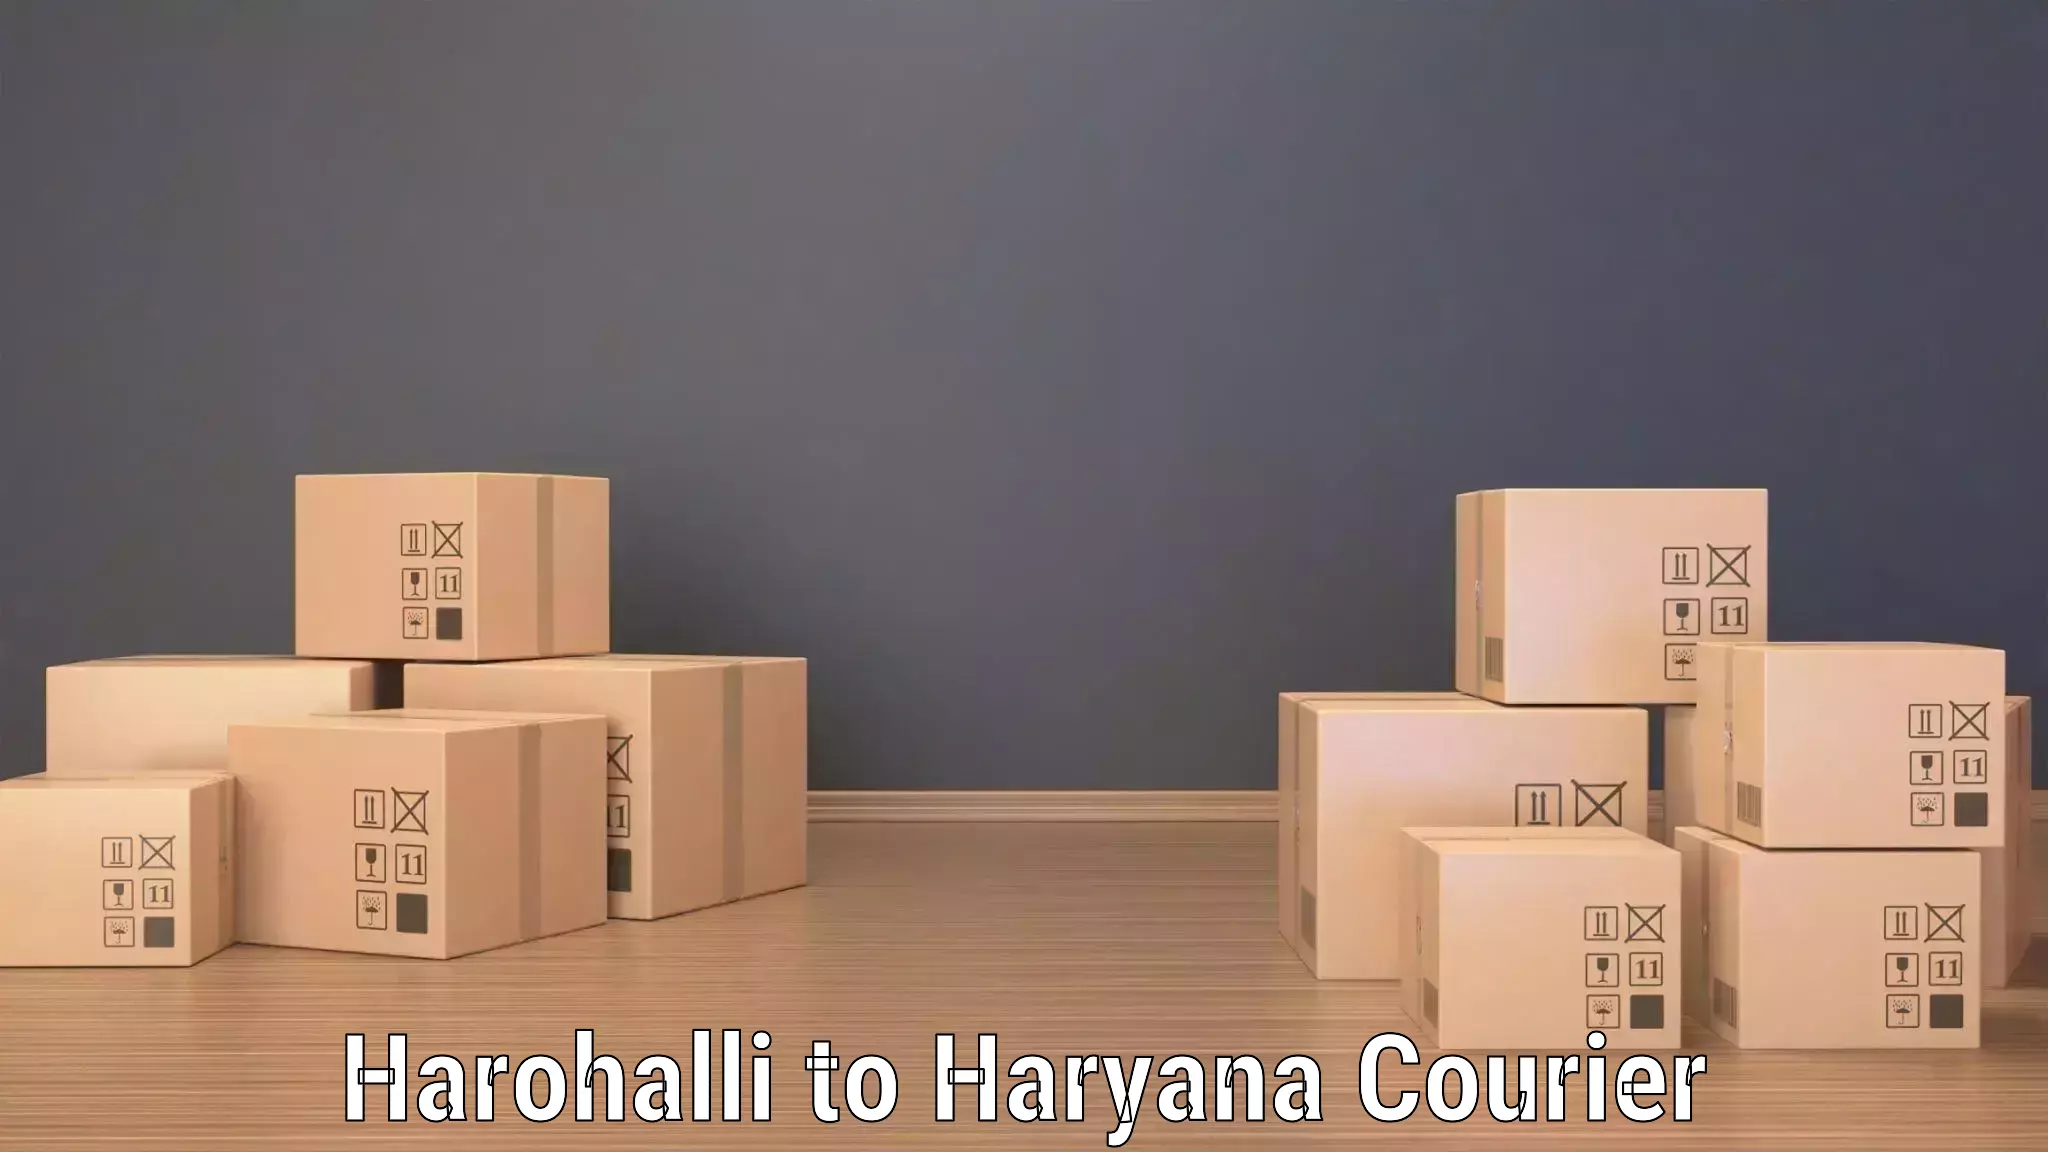 Reliable delivery network Harohalli to Rewari